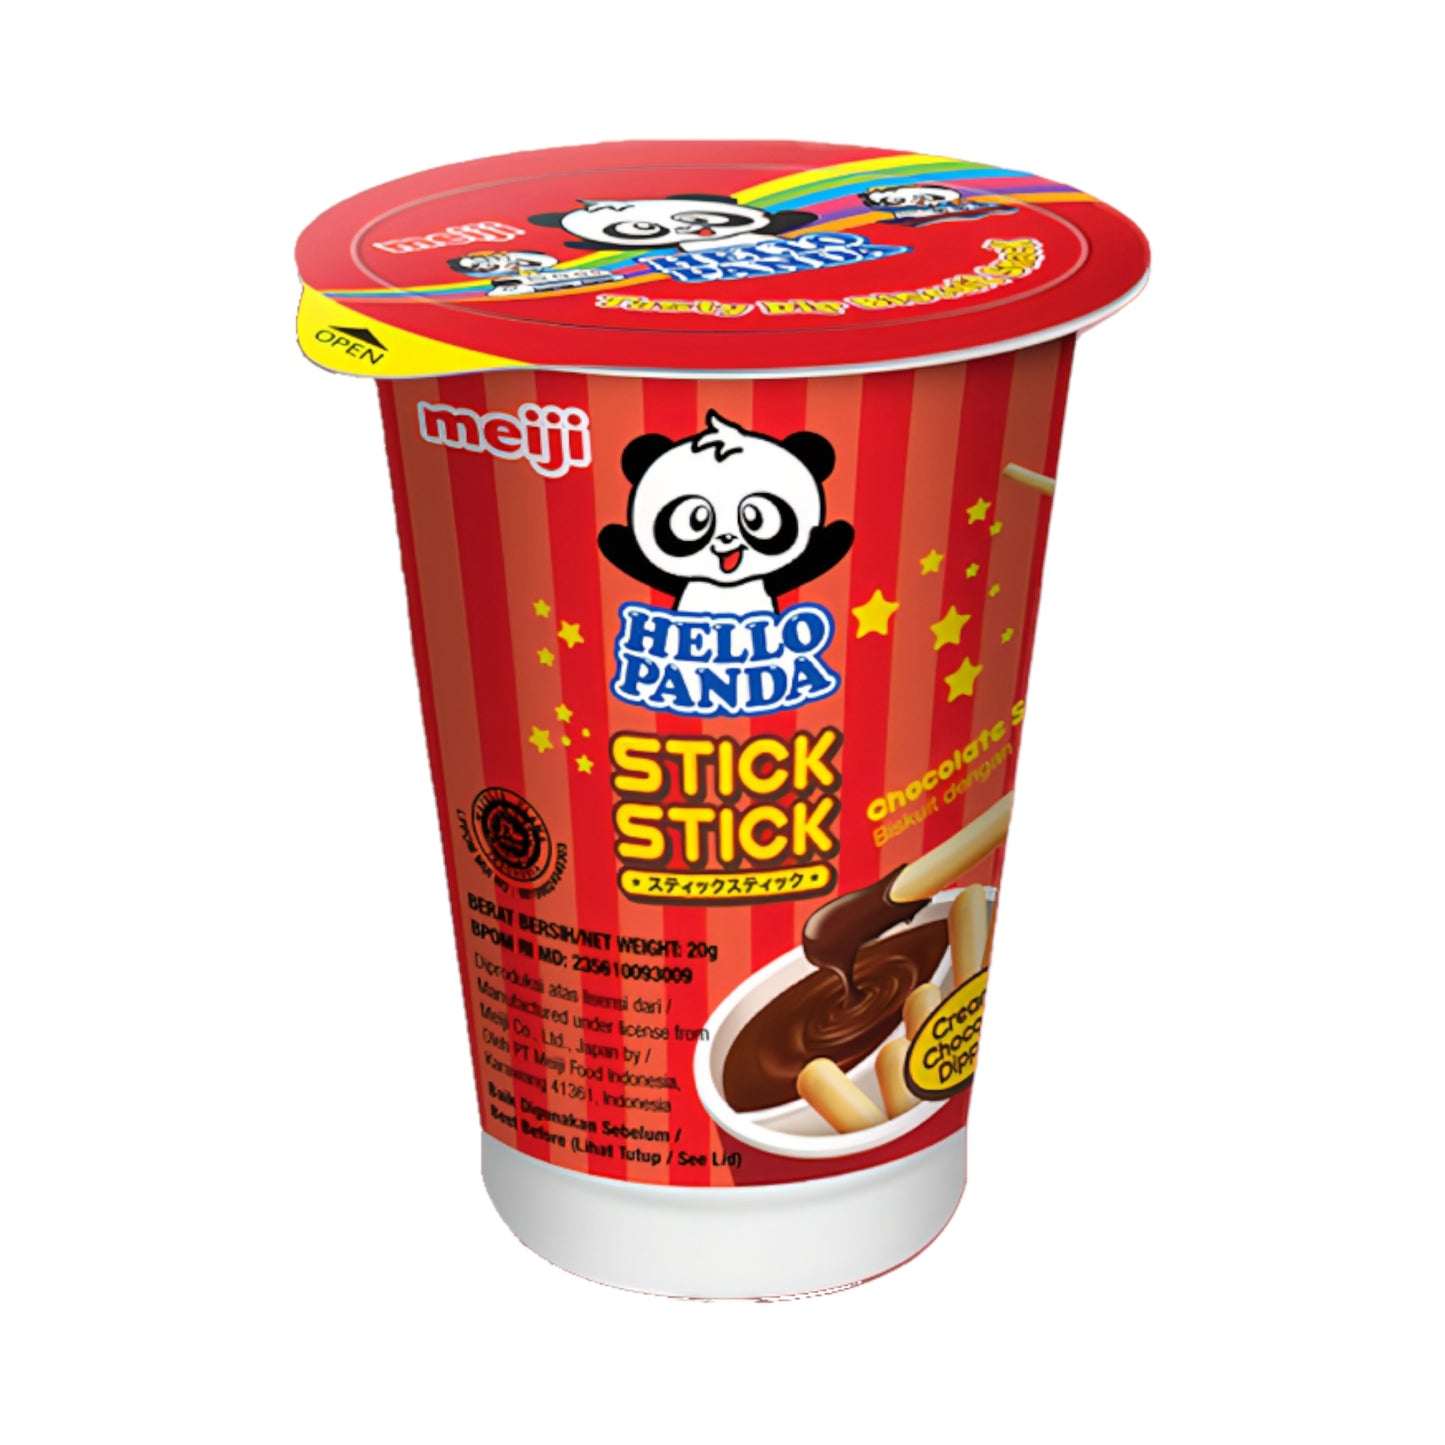 Meiji Hello Panda Stick Stick Chocolate - 20g